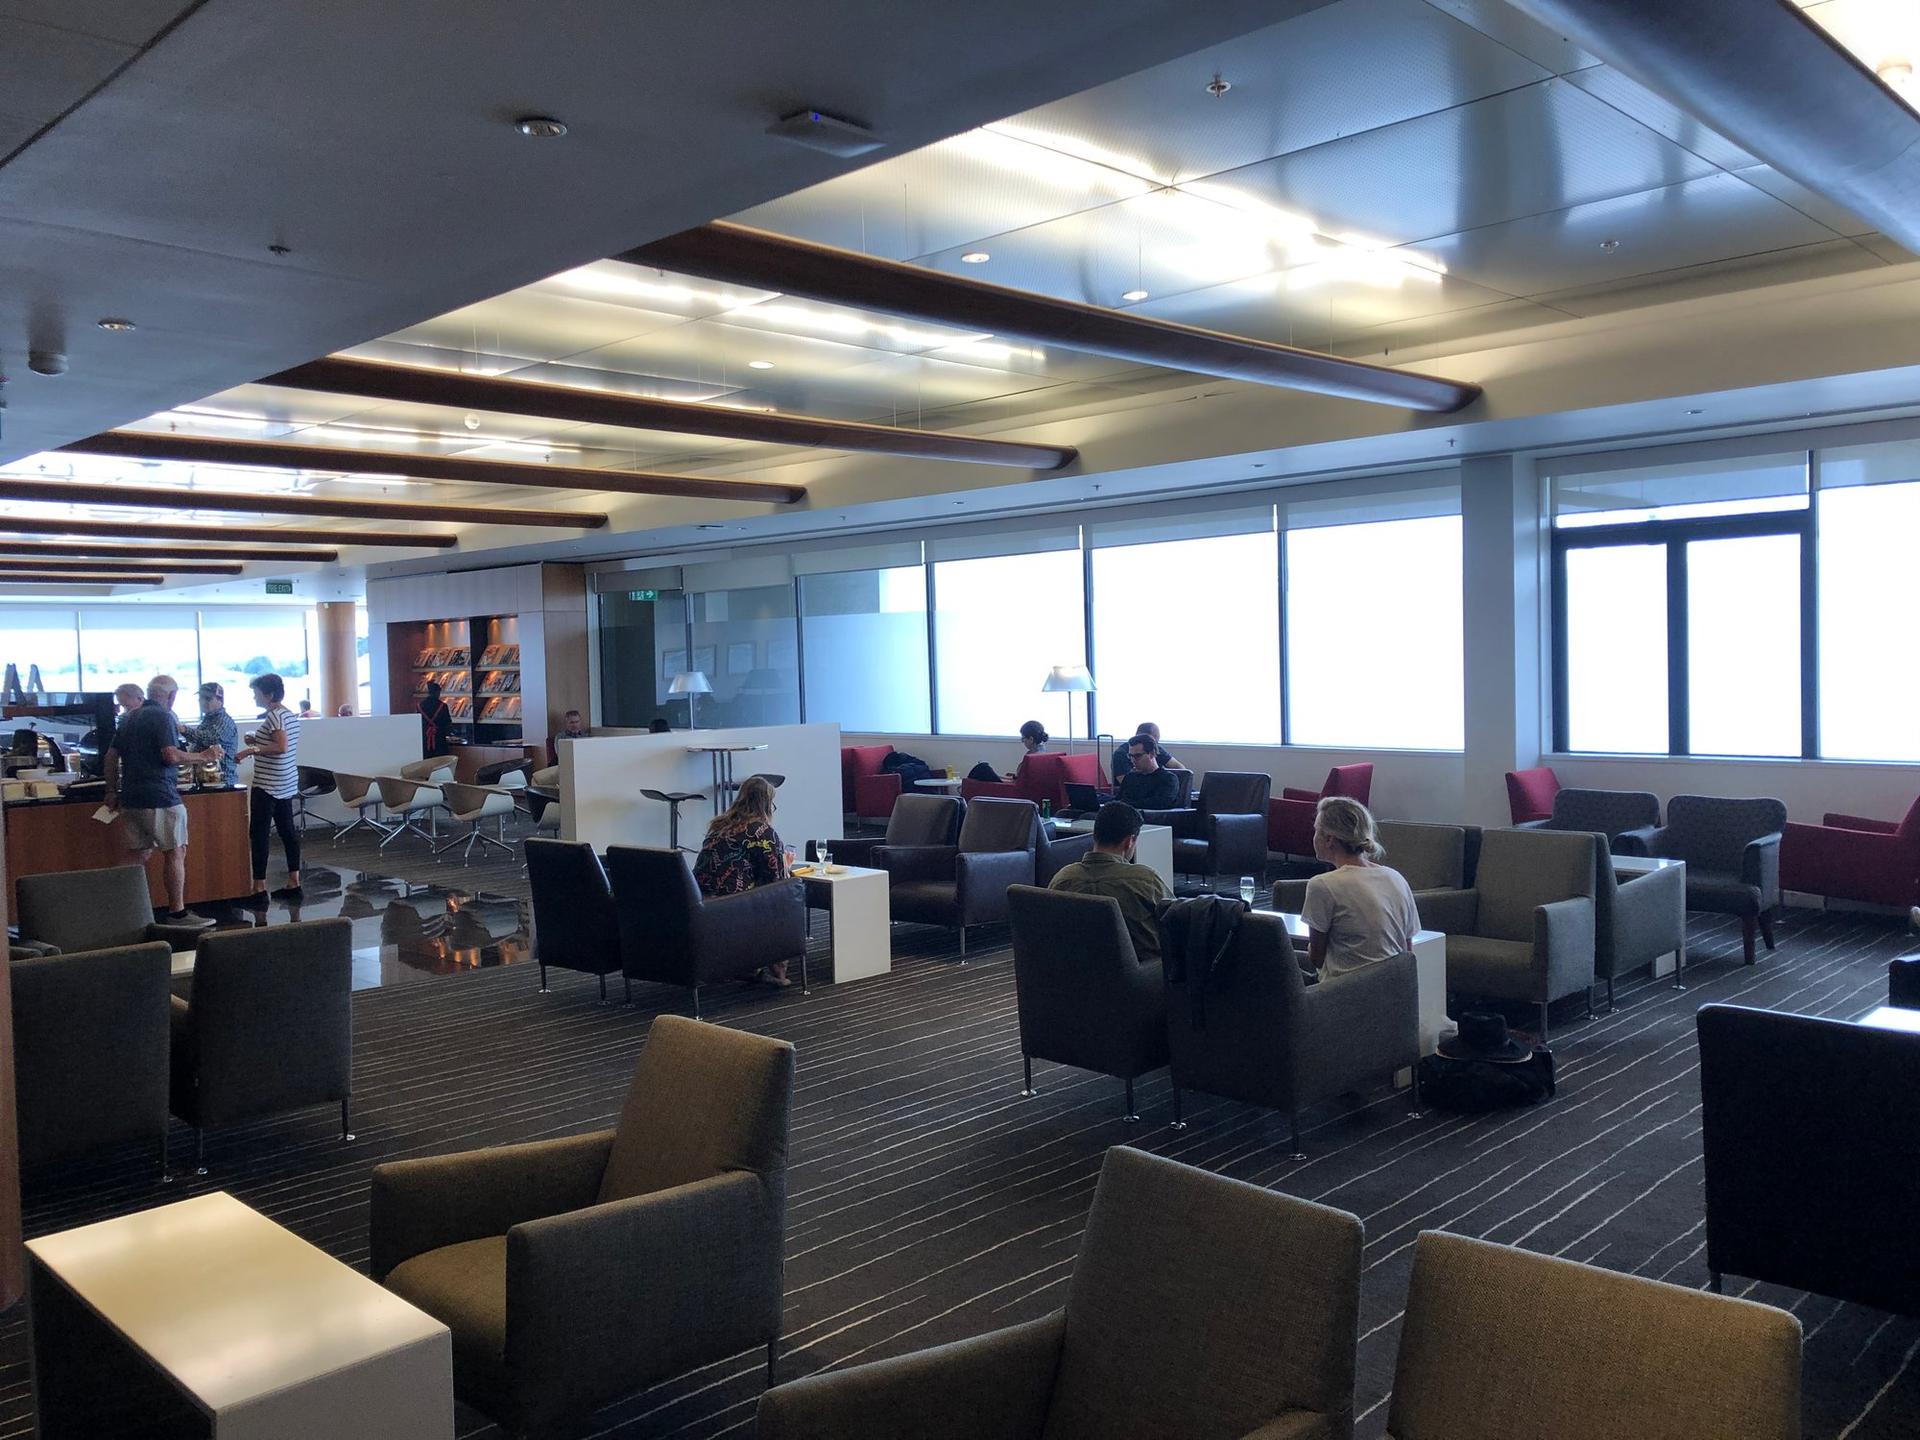 Qantas Airways International Business Lounge image 35 of 37